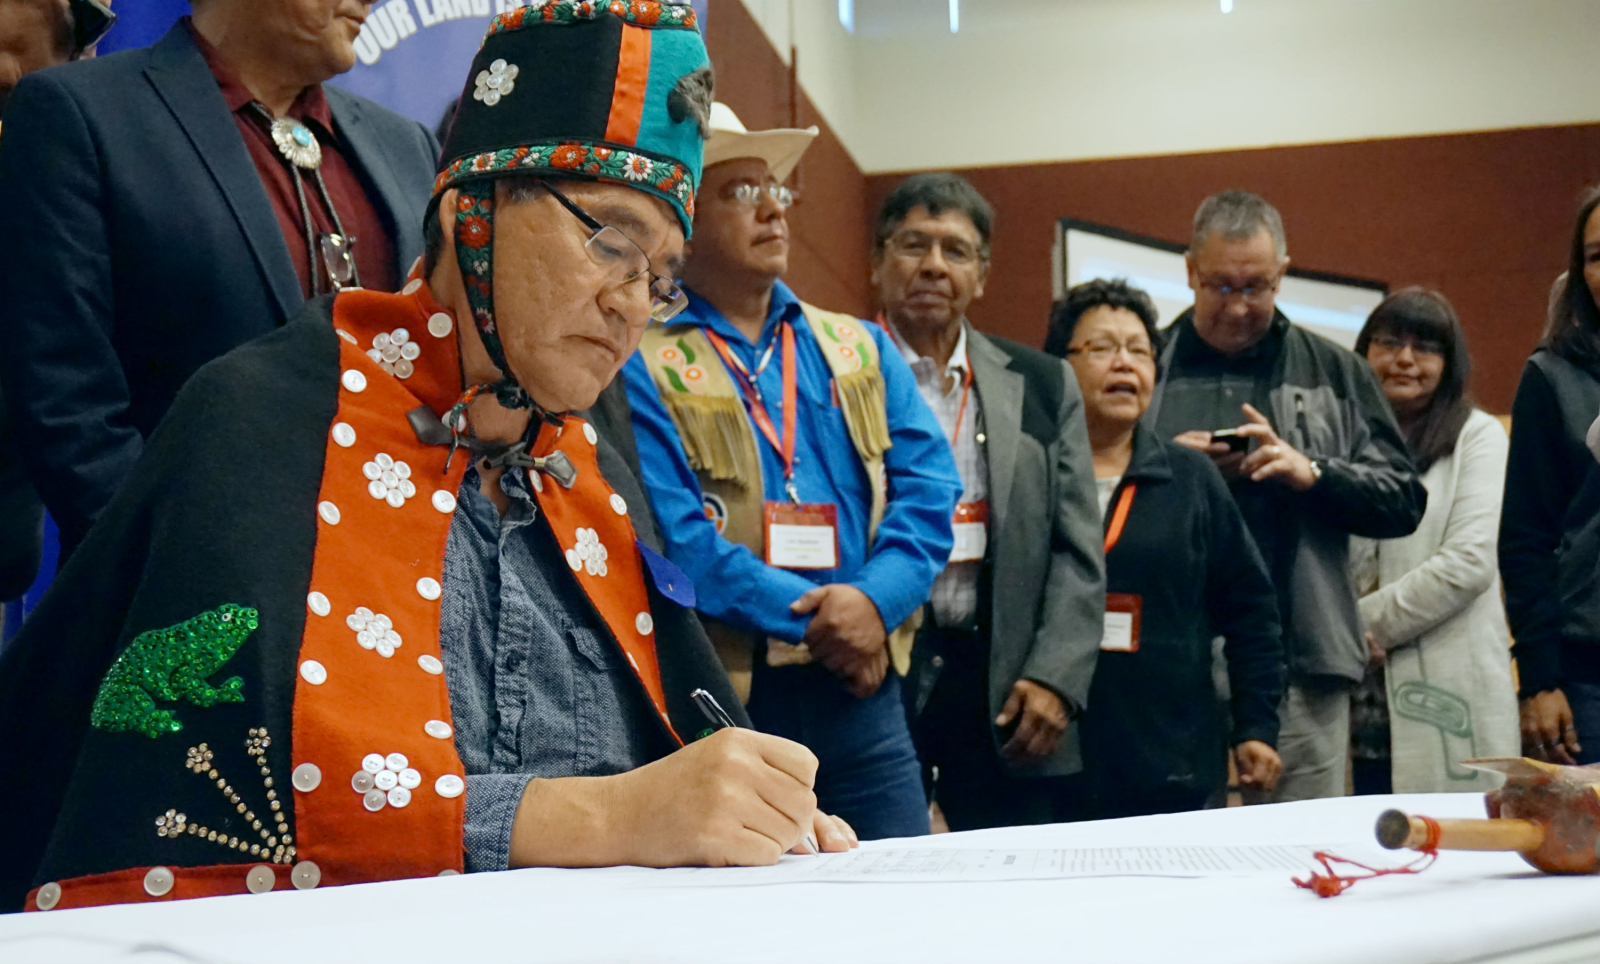 John Risdale, Chief Na'Moks, Wet'suwet'en First Nation, Treaty Alliance Against Tar Sands Expansion